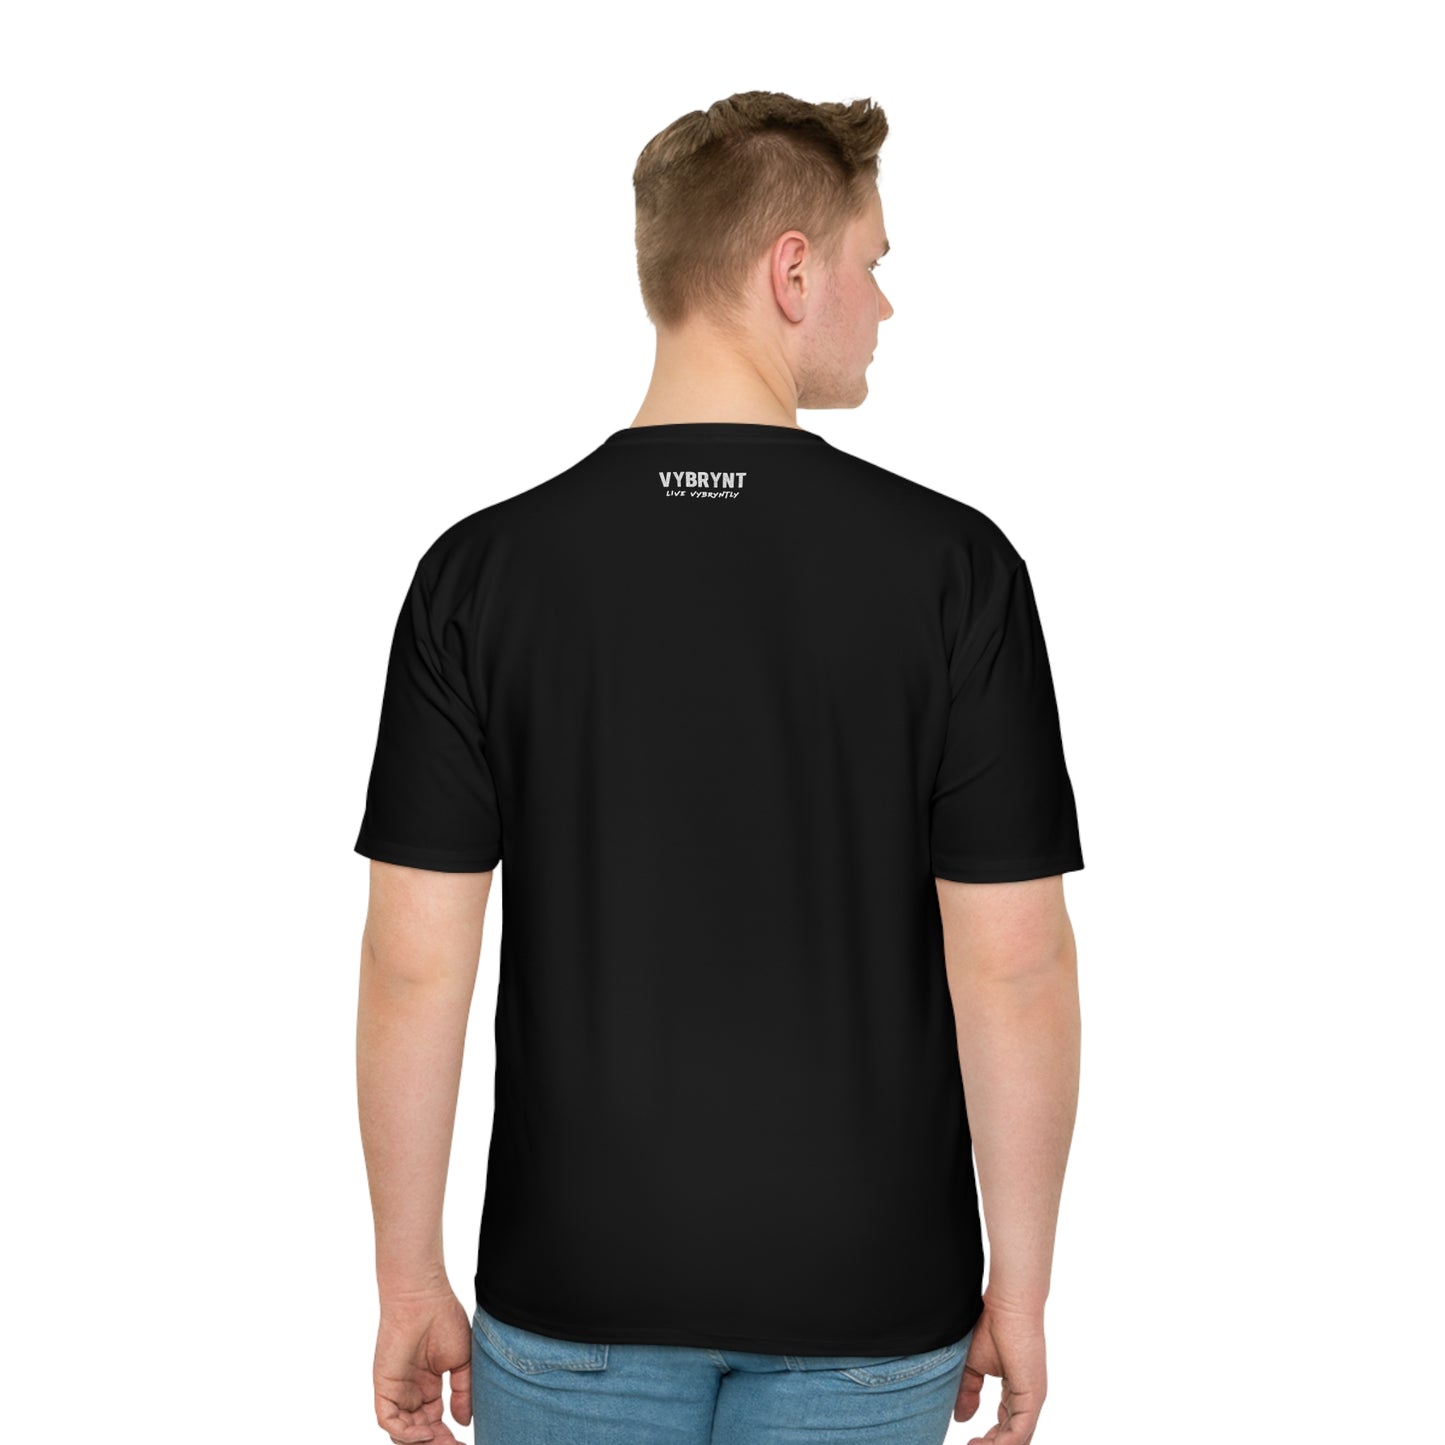 135th St Station Men's Black T-shirt